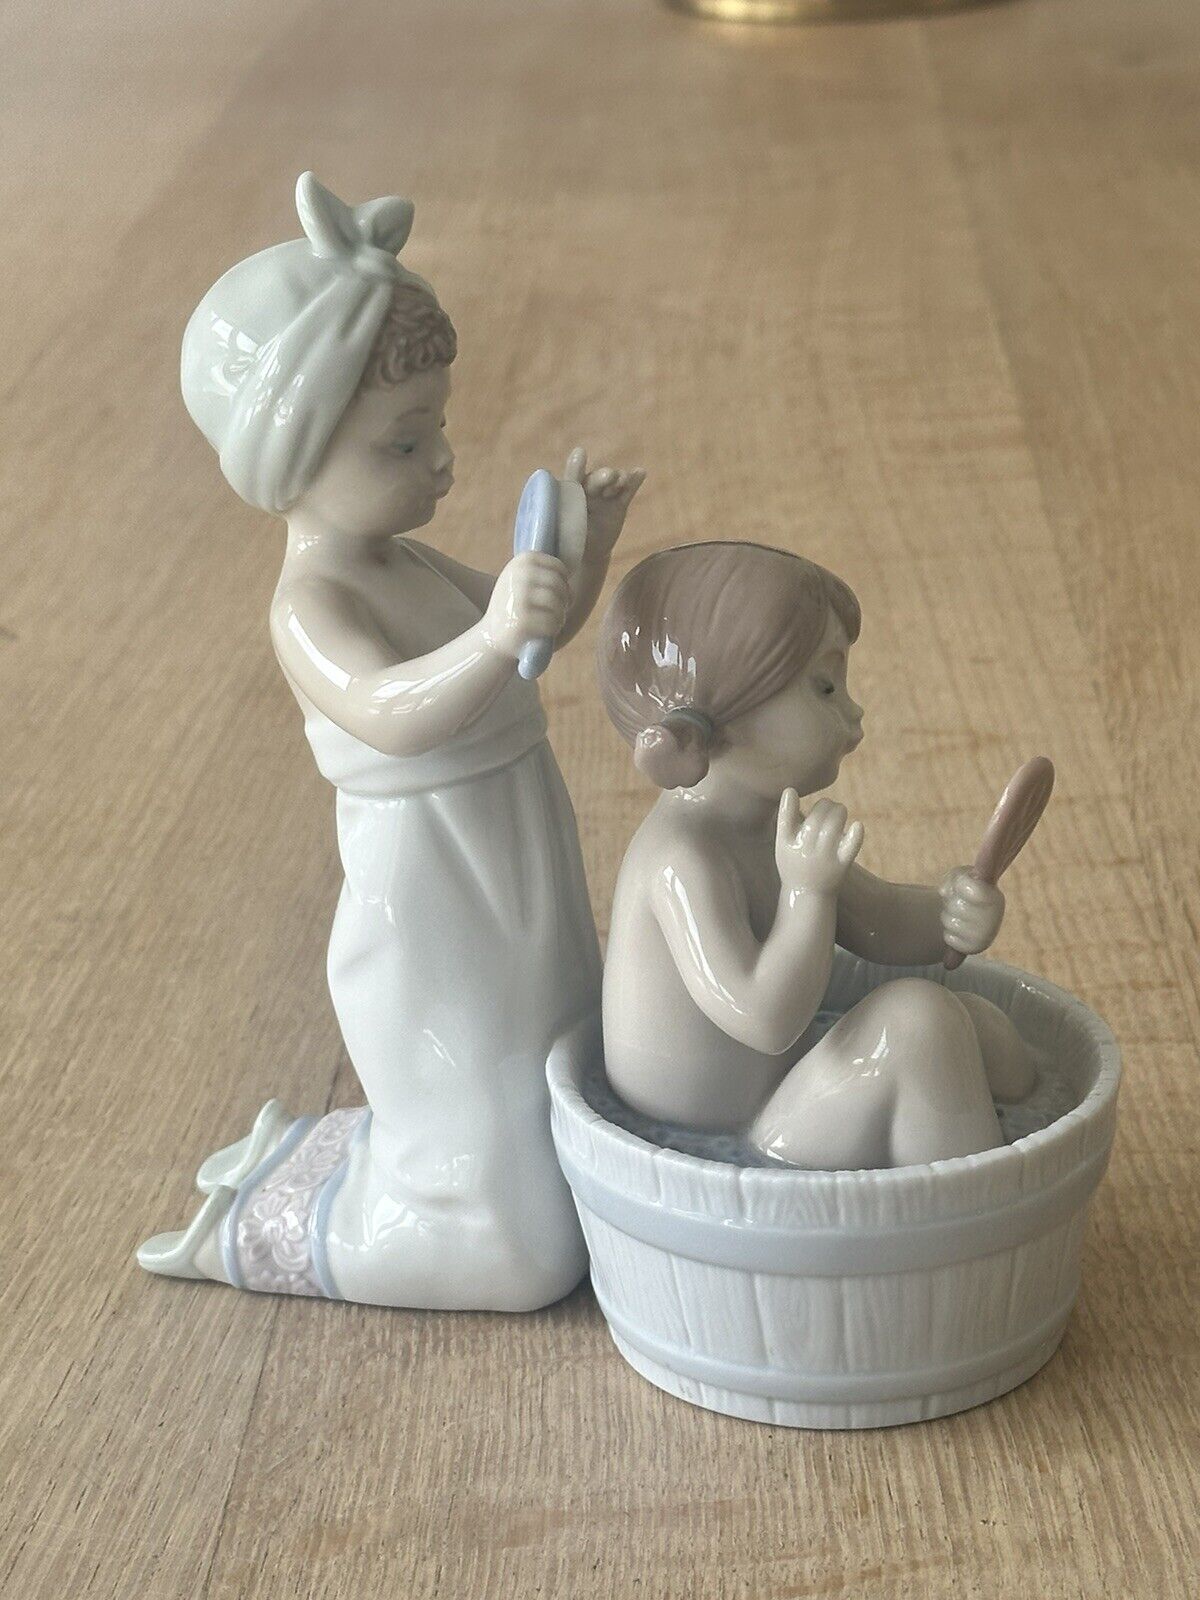 Lladro Porcelain Figurine “Bathing Beauties”